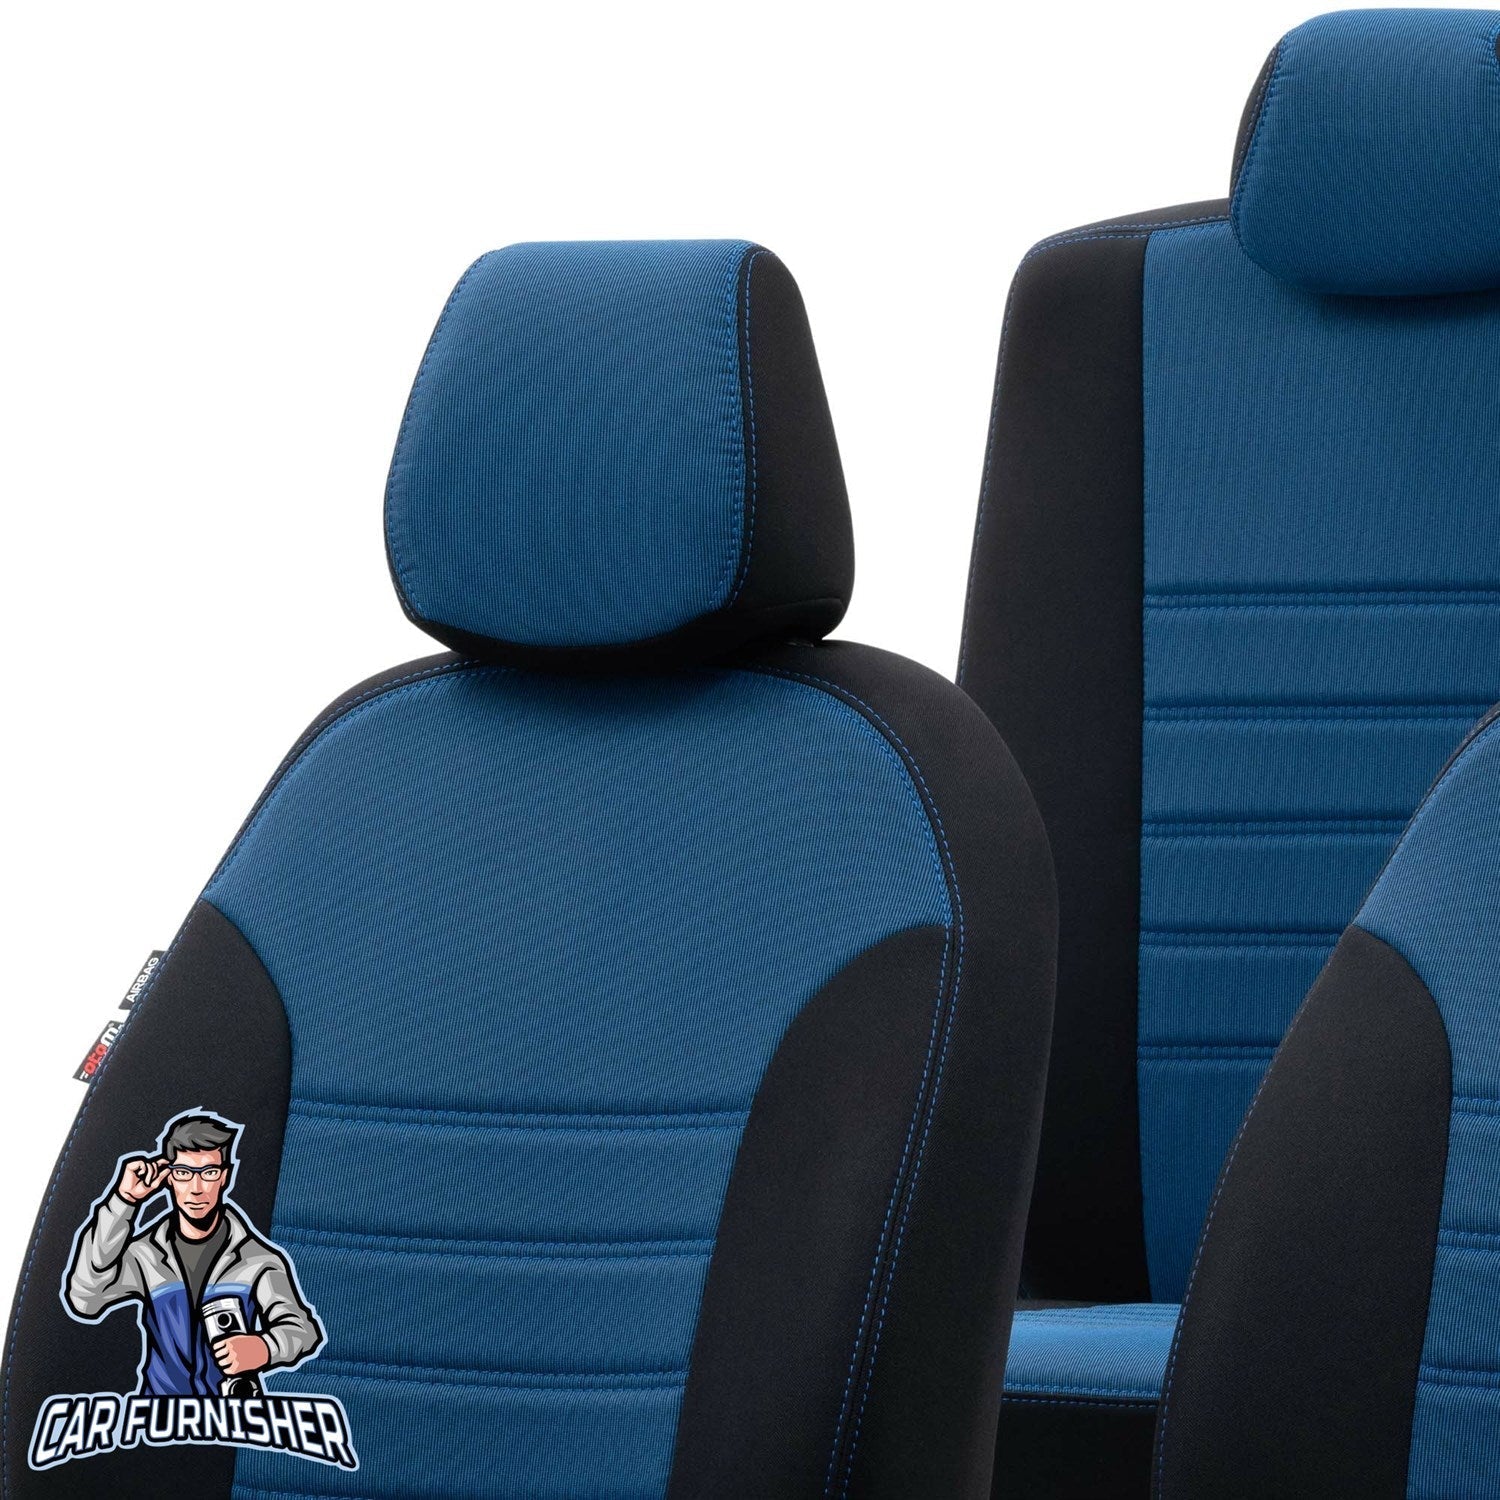 Dacia Sandero Seat Covers Original Jacquard Design Blue Jacquard Fabric